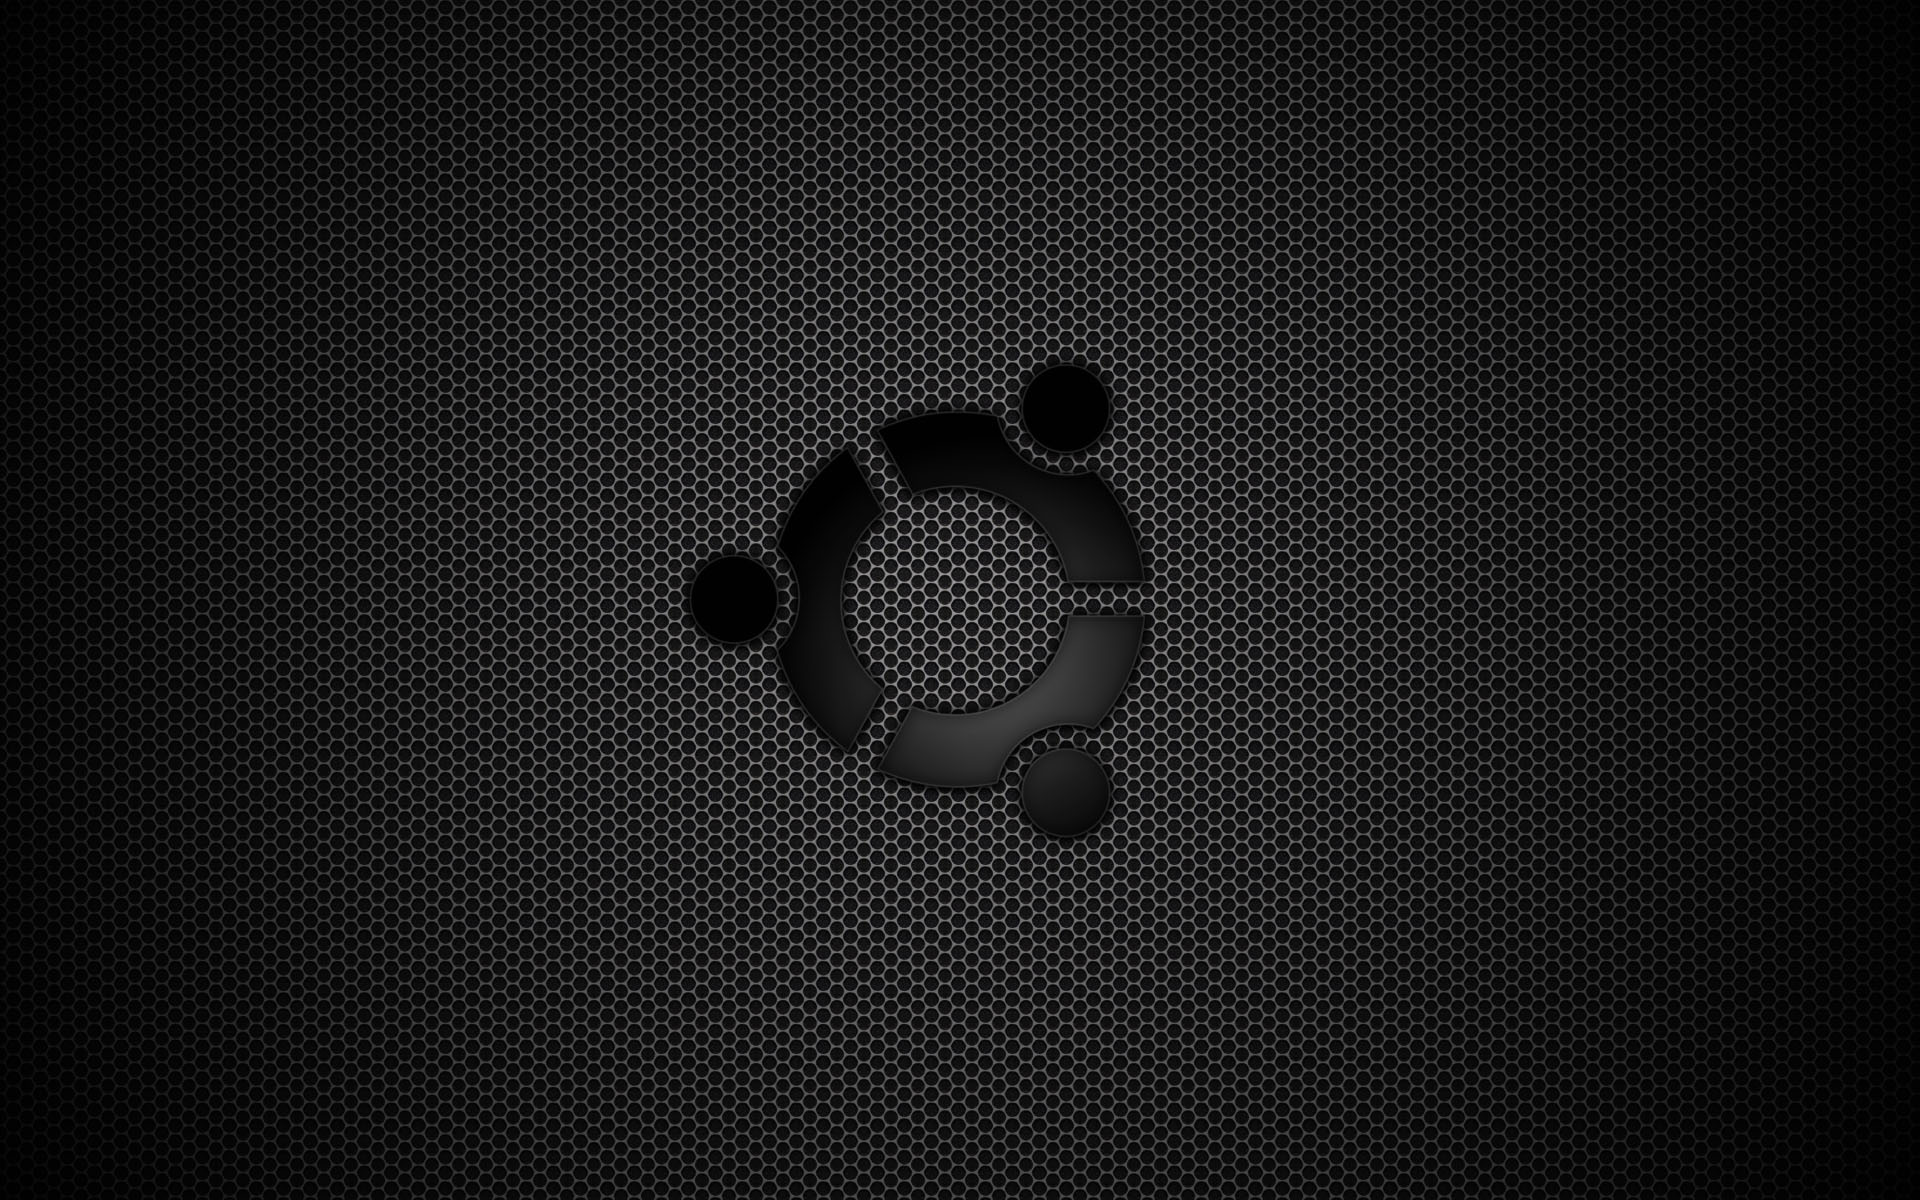 linux wallpaper widescreen wallpapers hd linux ubuntu 13 04 wallpaper